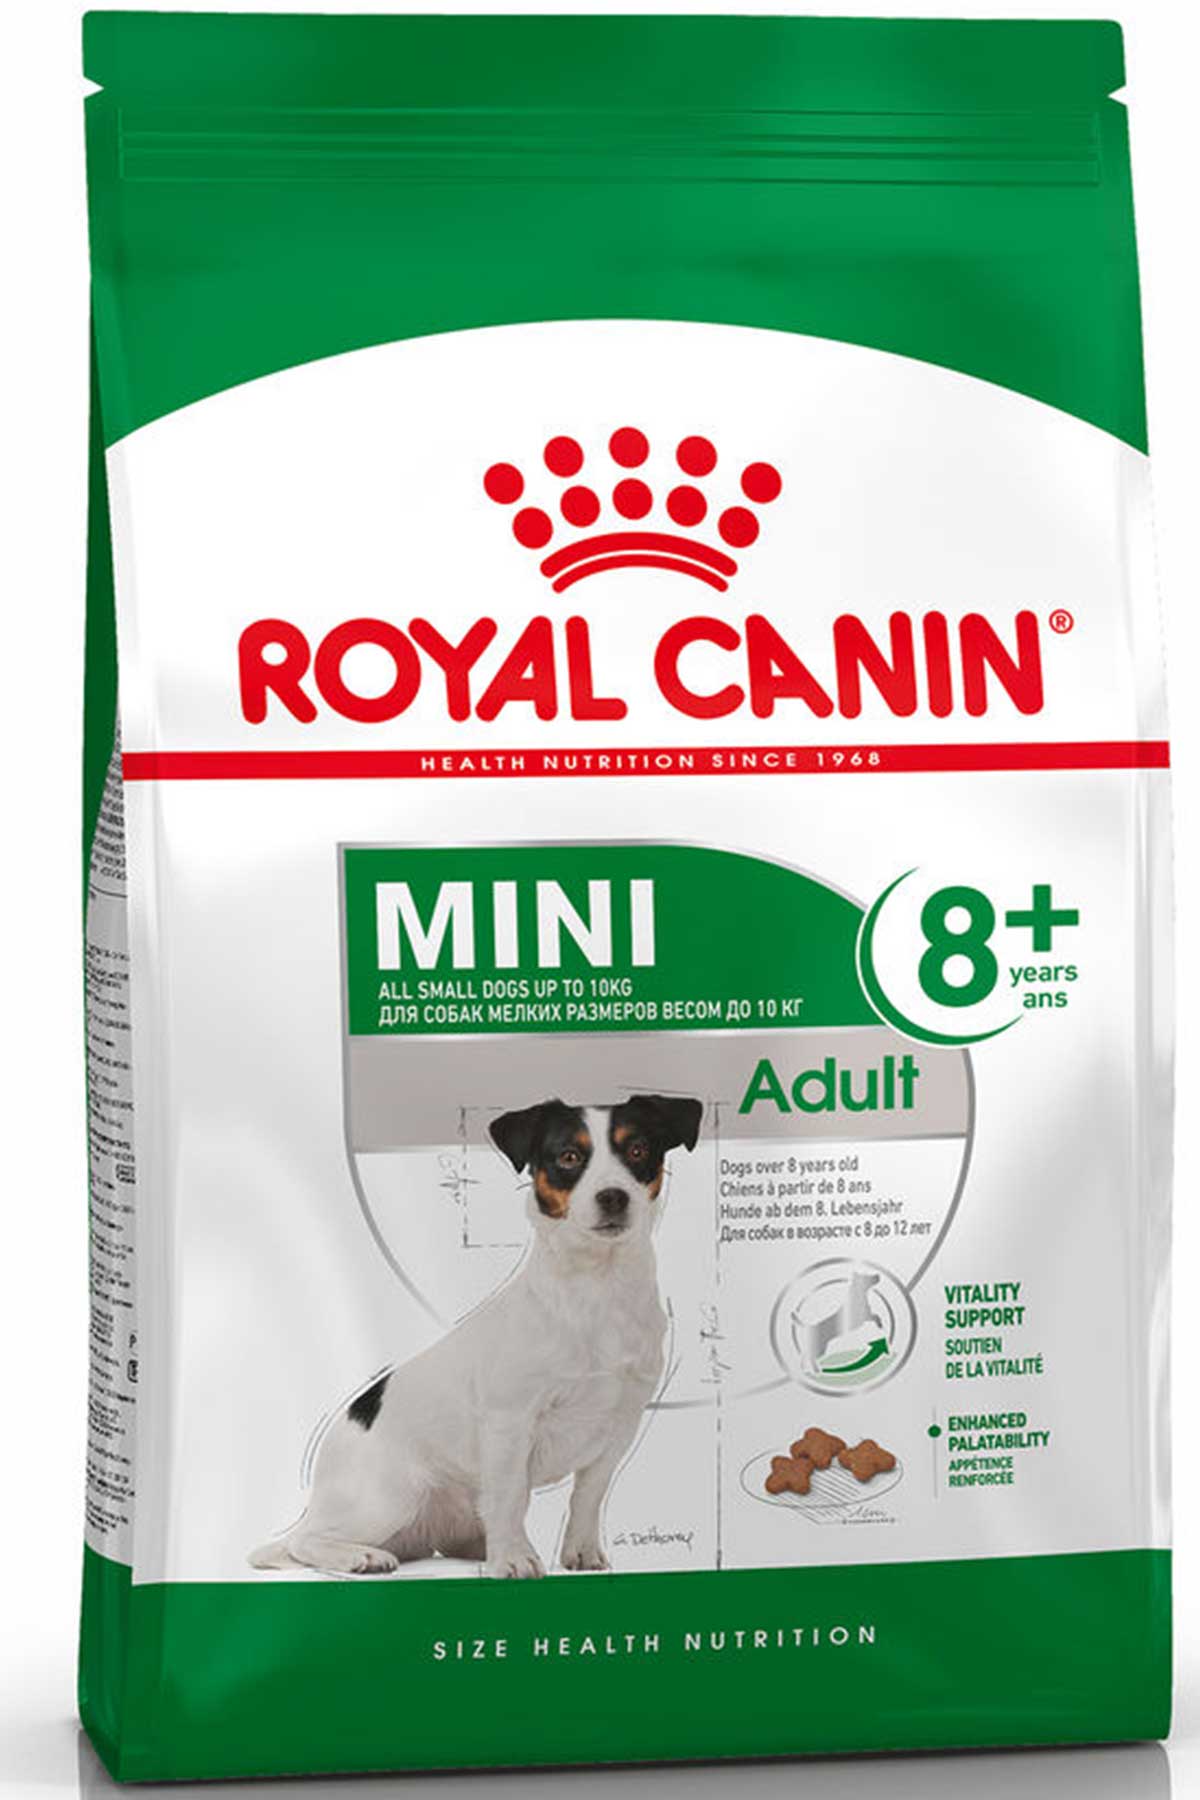 Royal Canin Mini Adult +8 Küçük Irk Yaşlı Köpek Maması 2kg